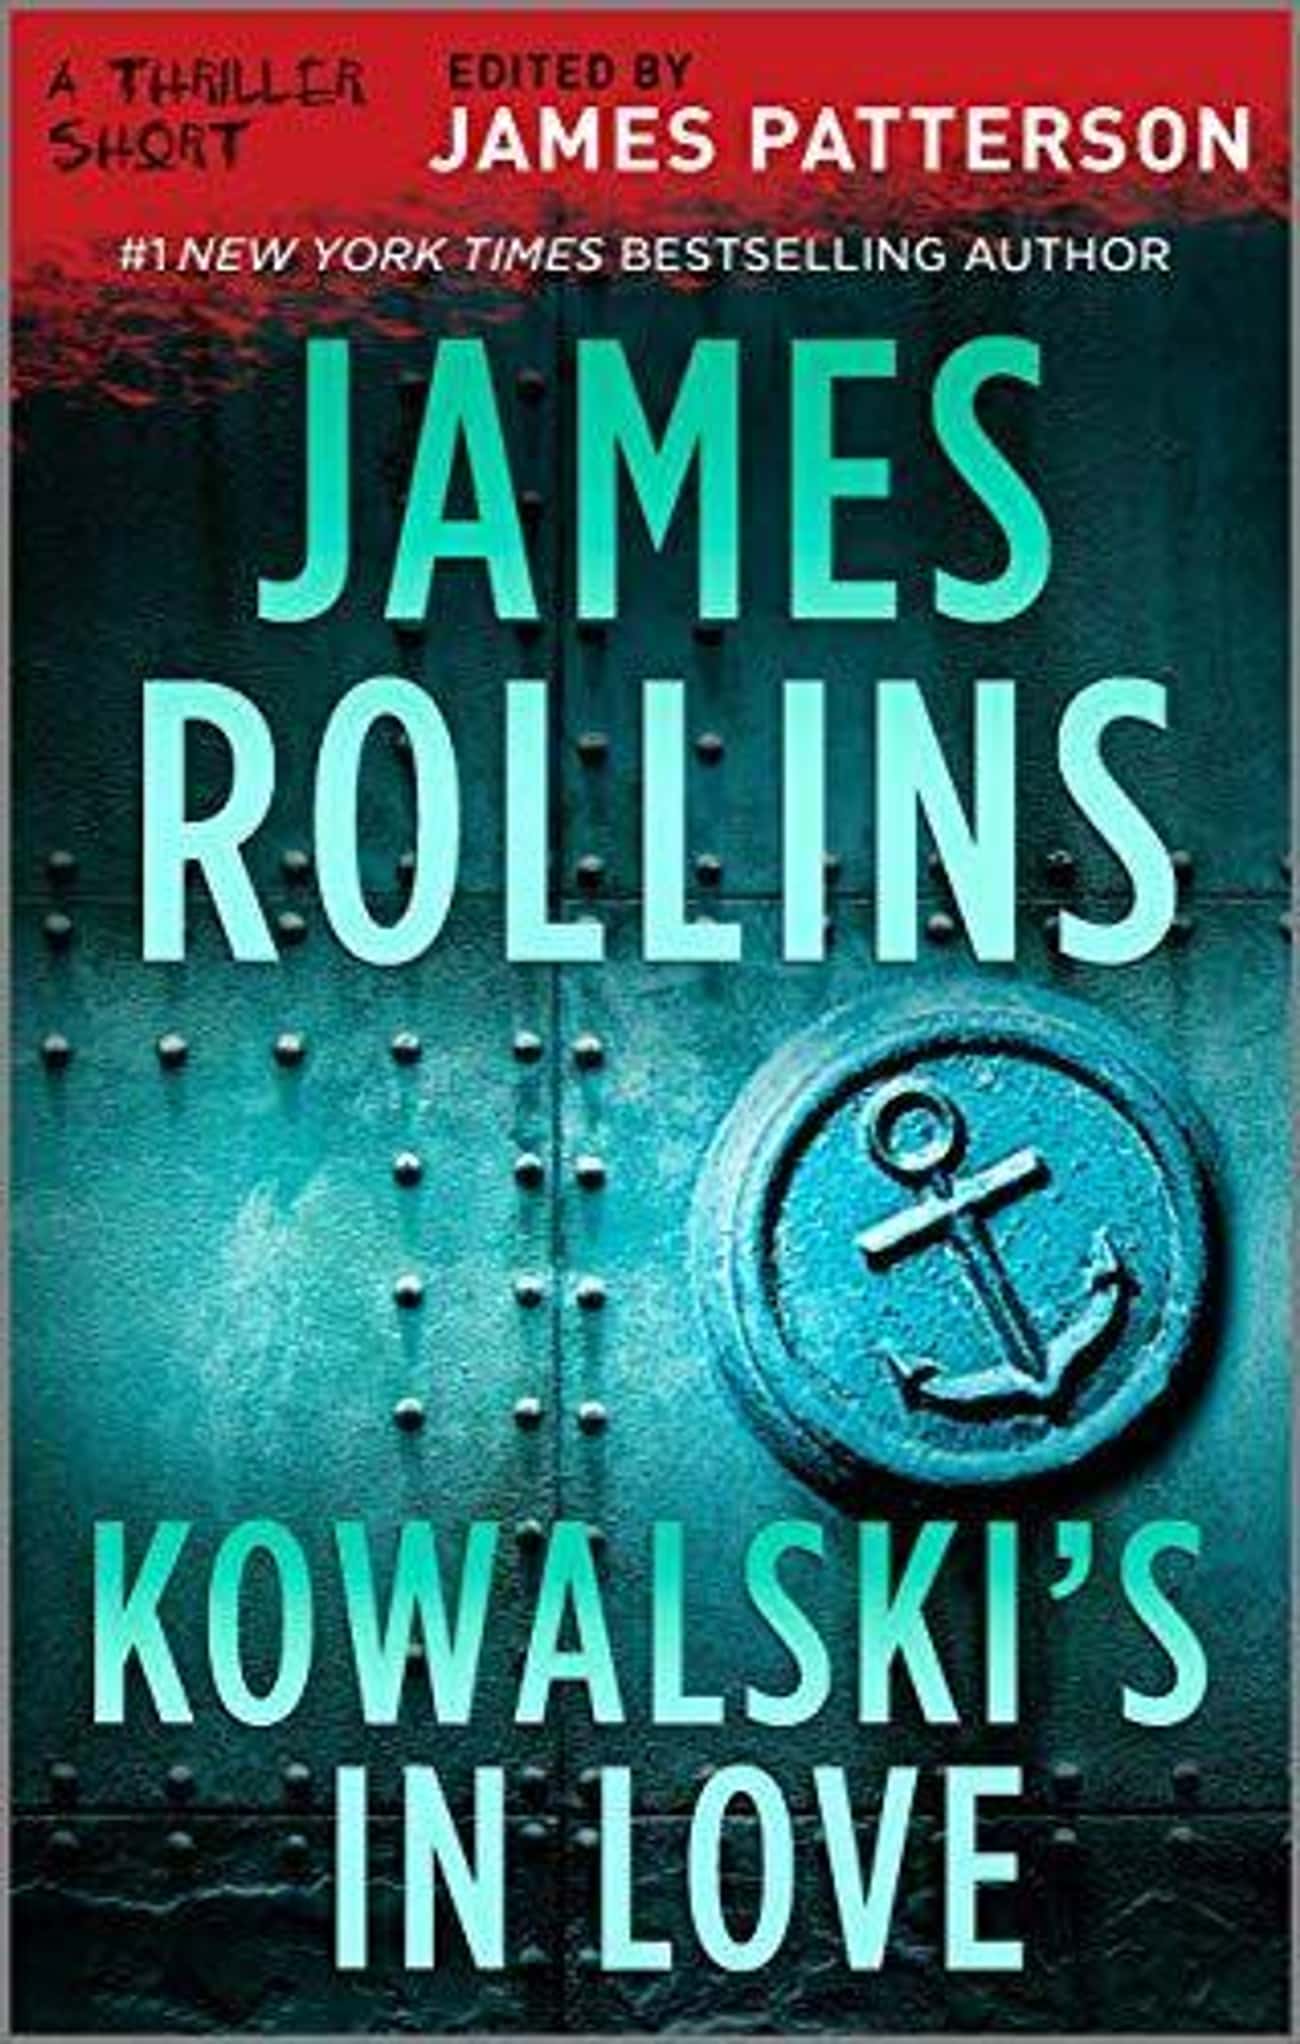 Best James Rollins Books | List of Popular James Rollins Books, Ranked